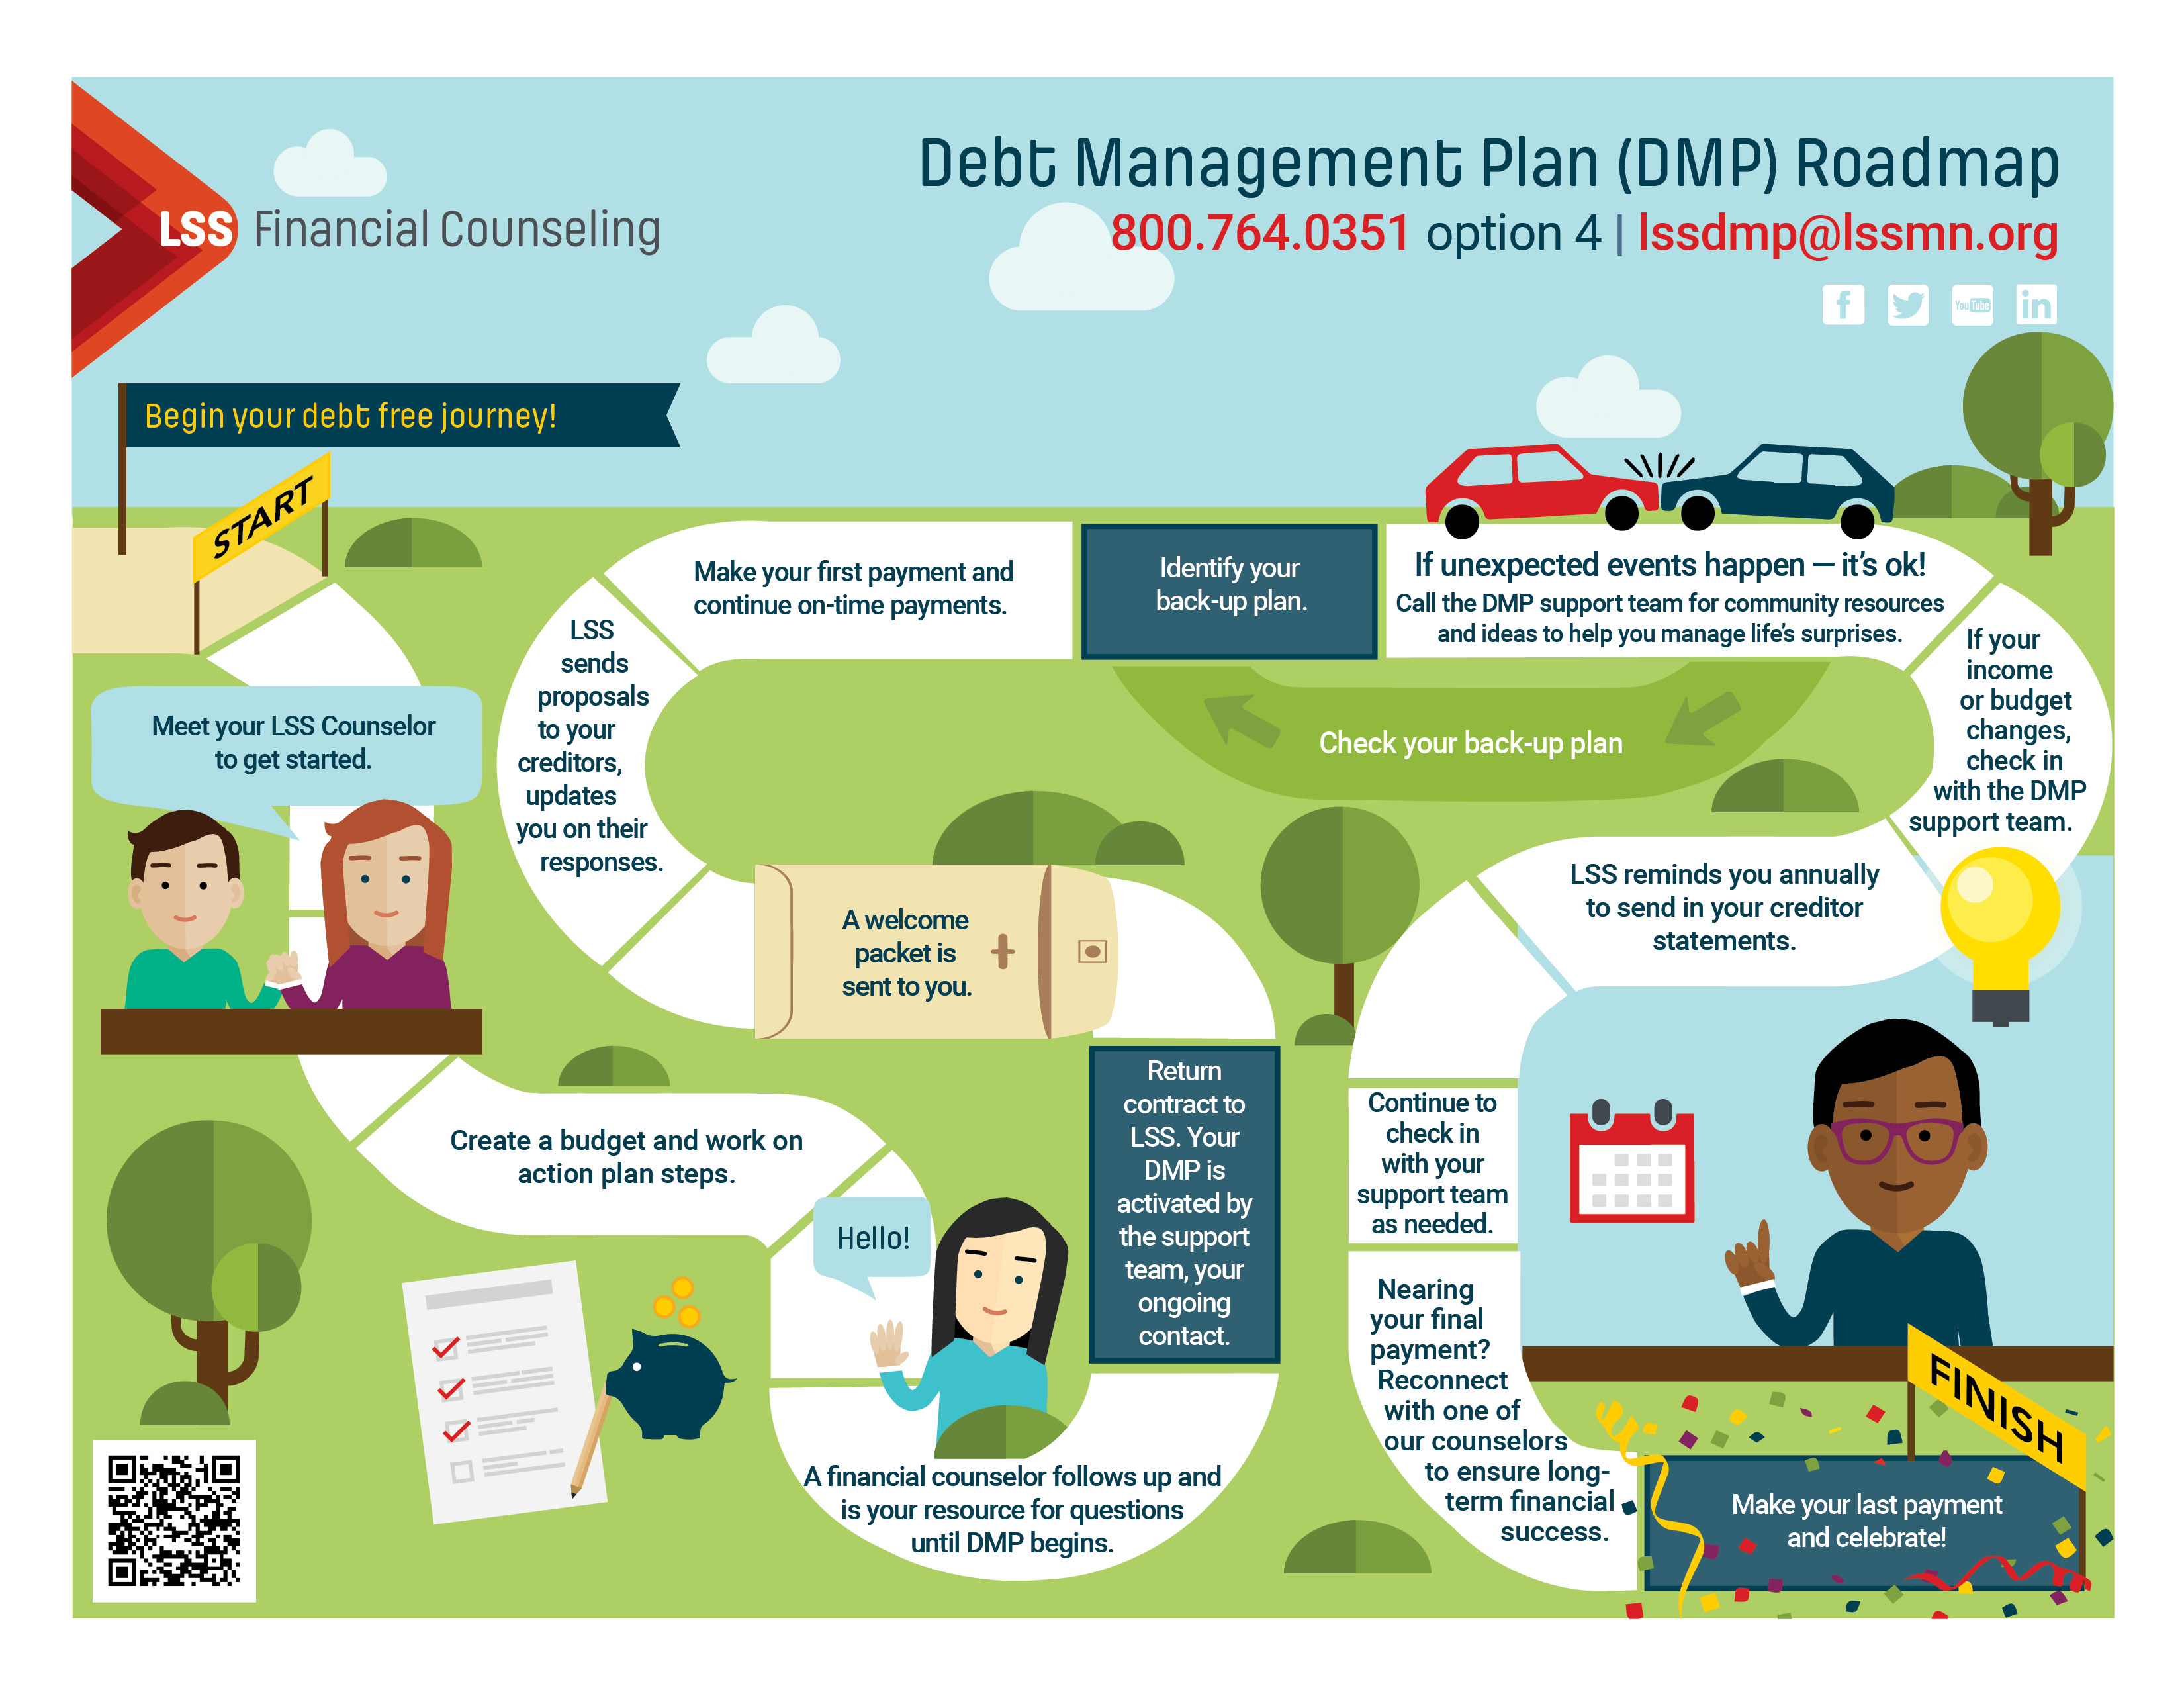 Debt Management Plan Road Map